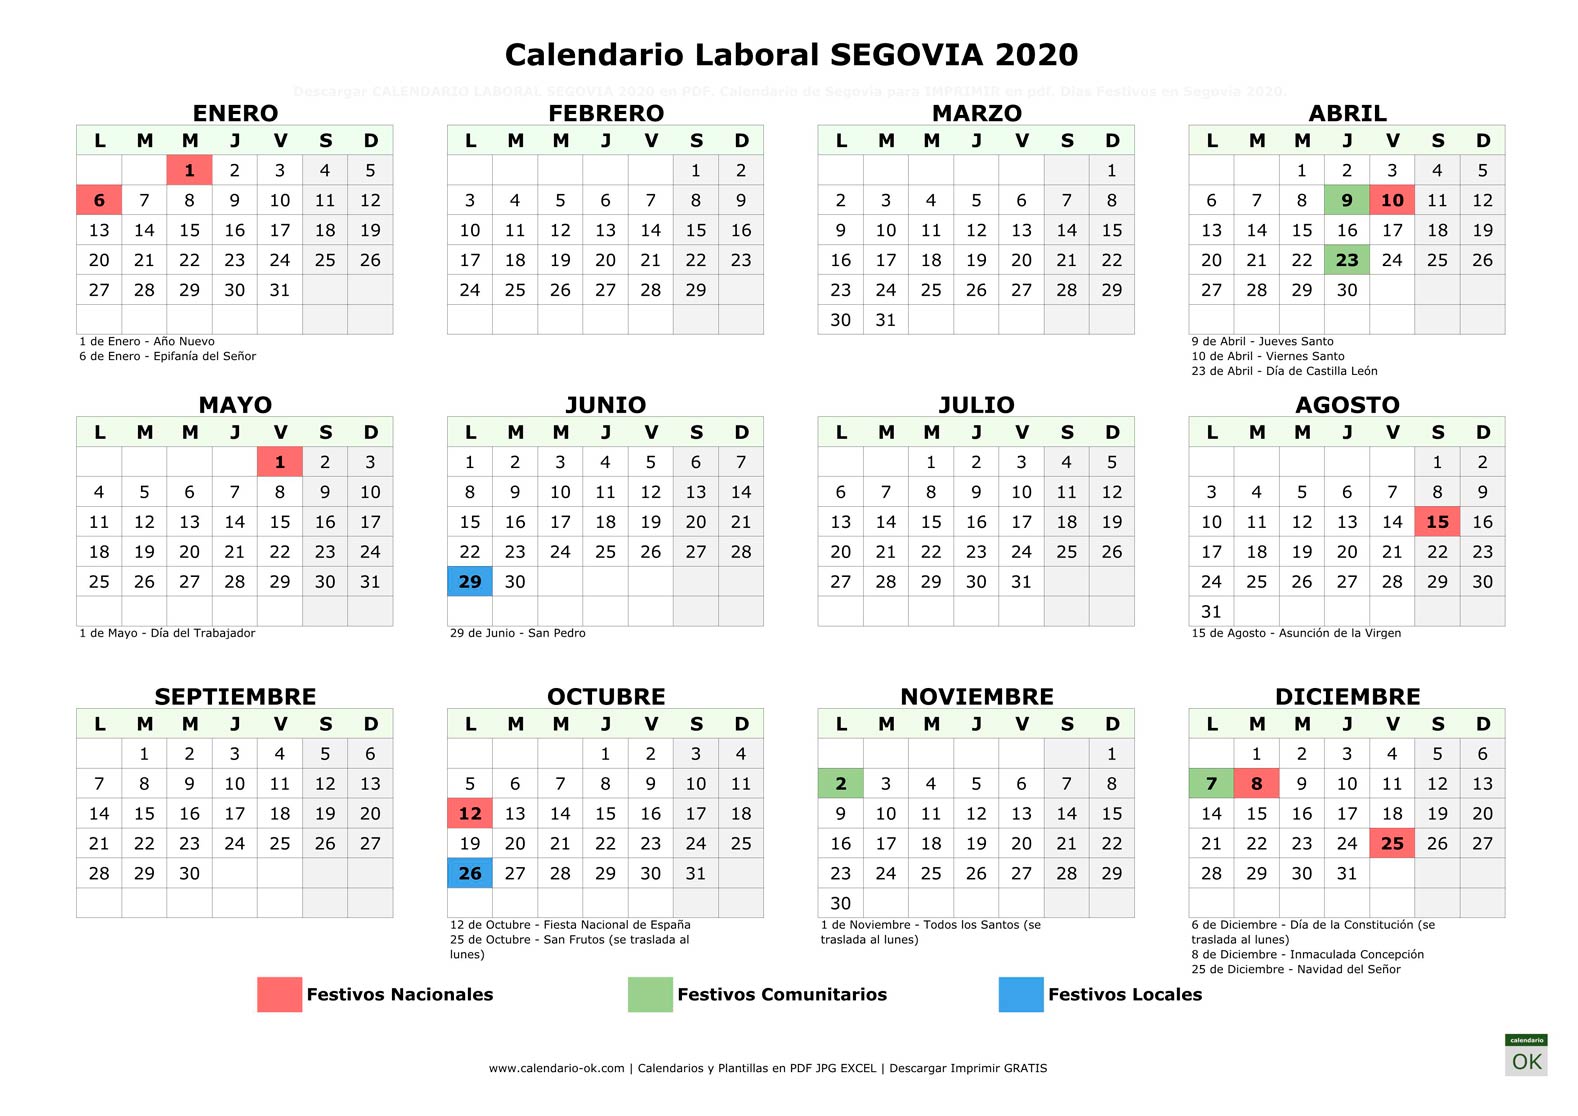 Calendario Laboral SEGOVIA 2020 horizontal